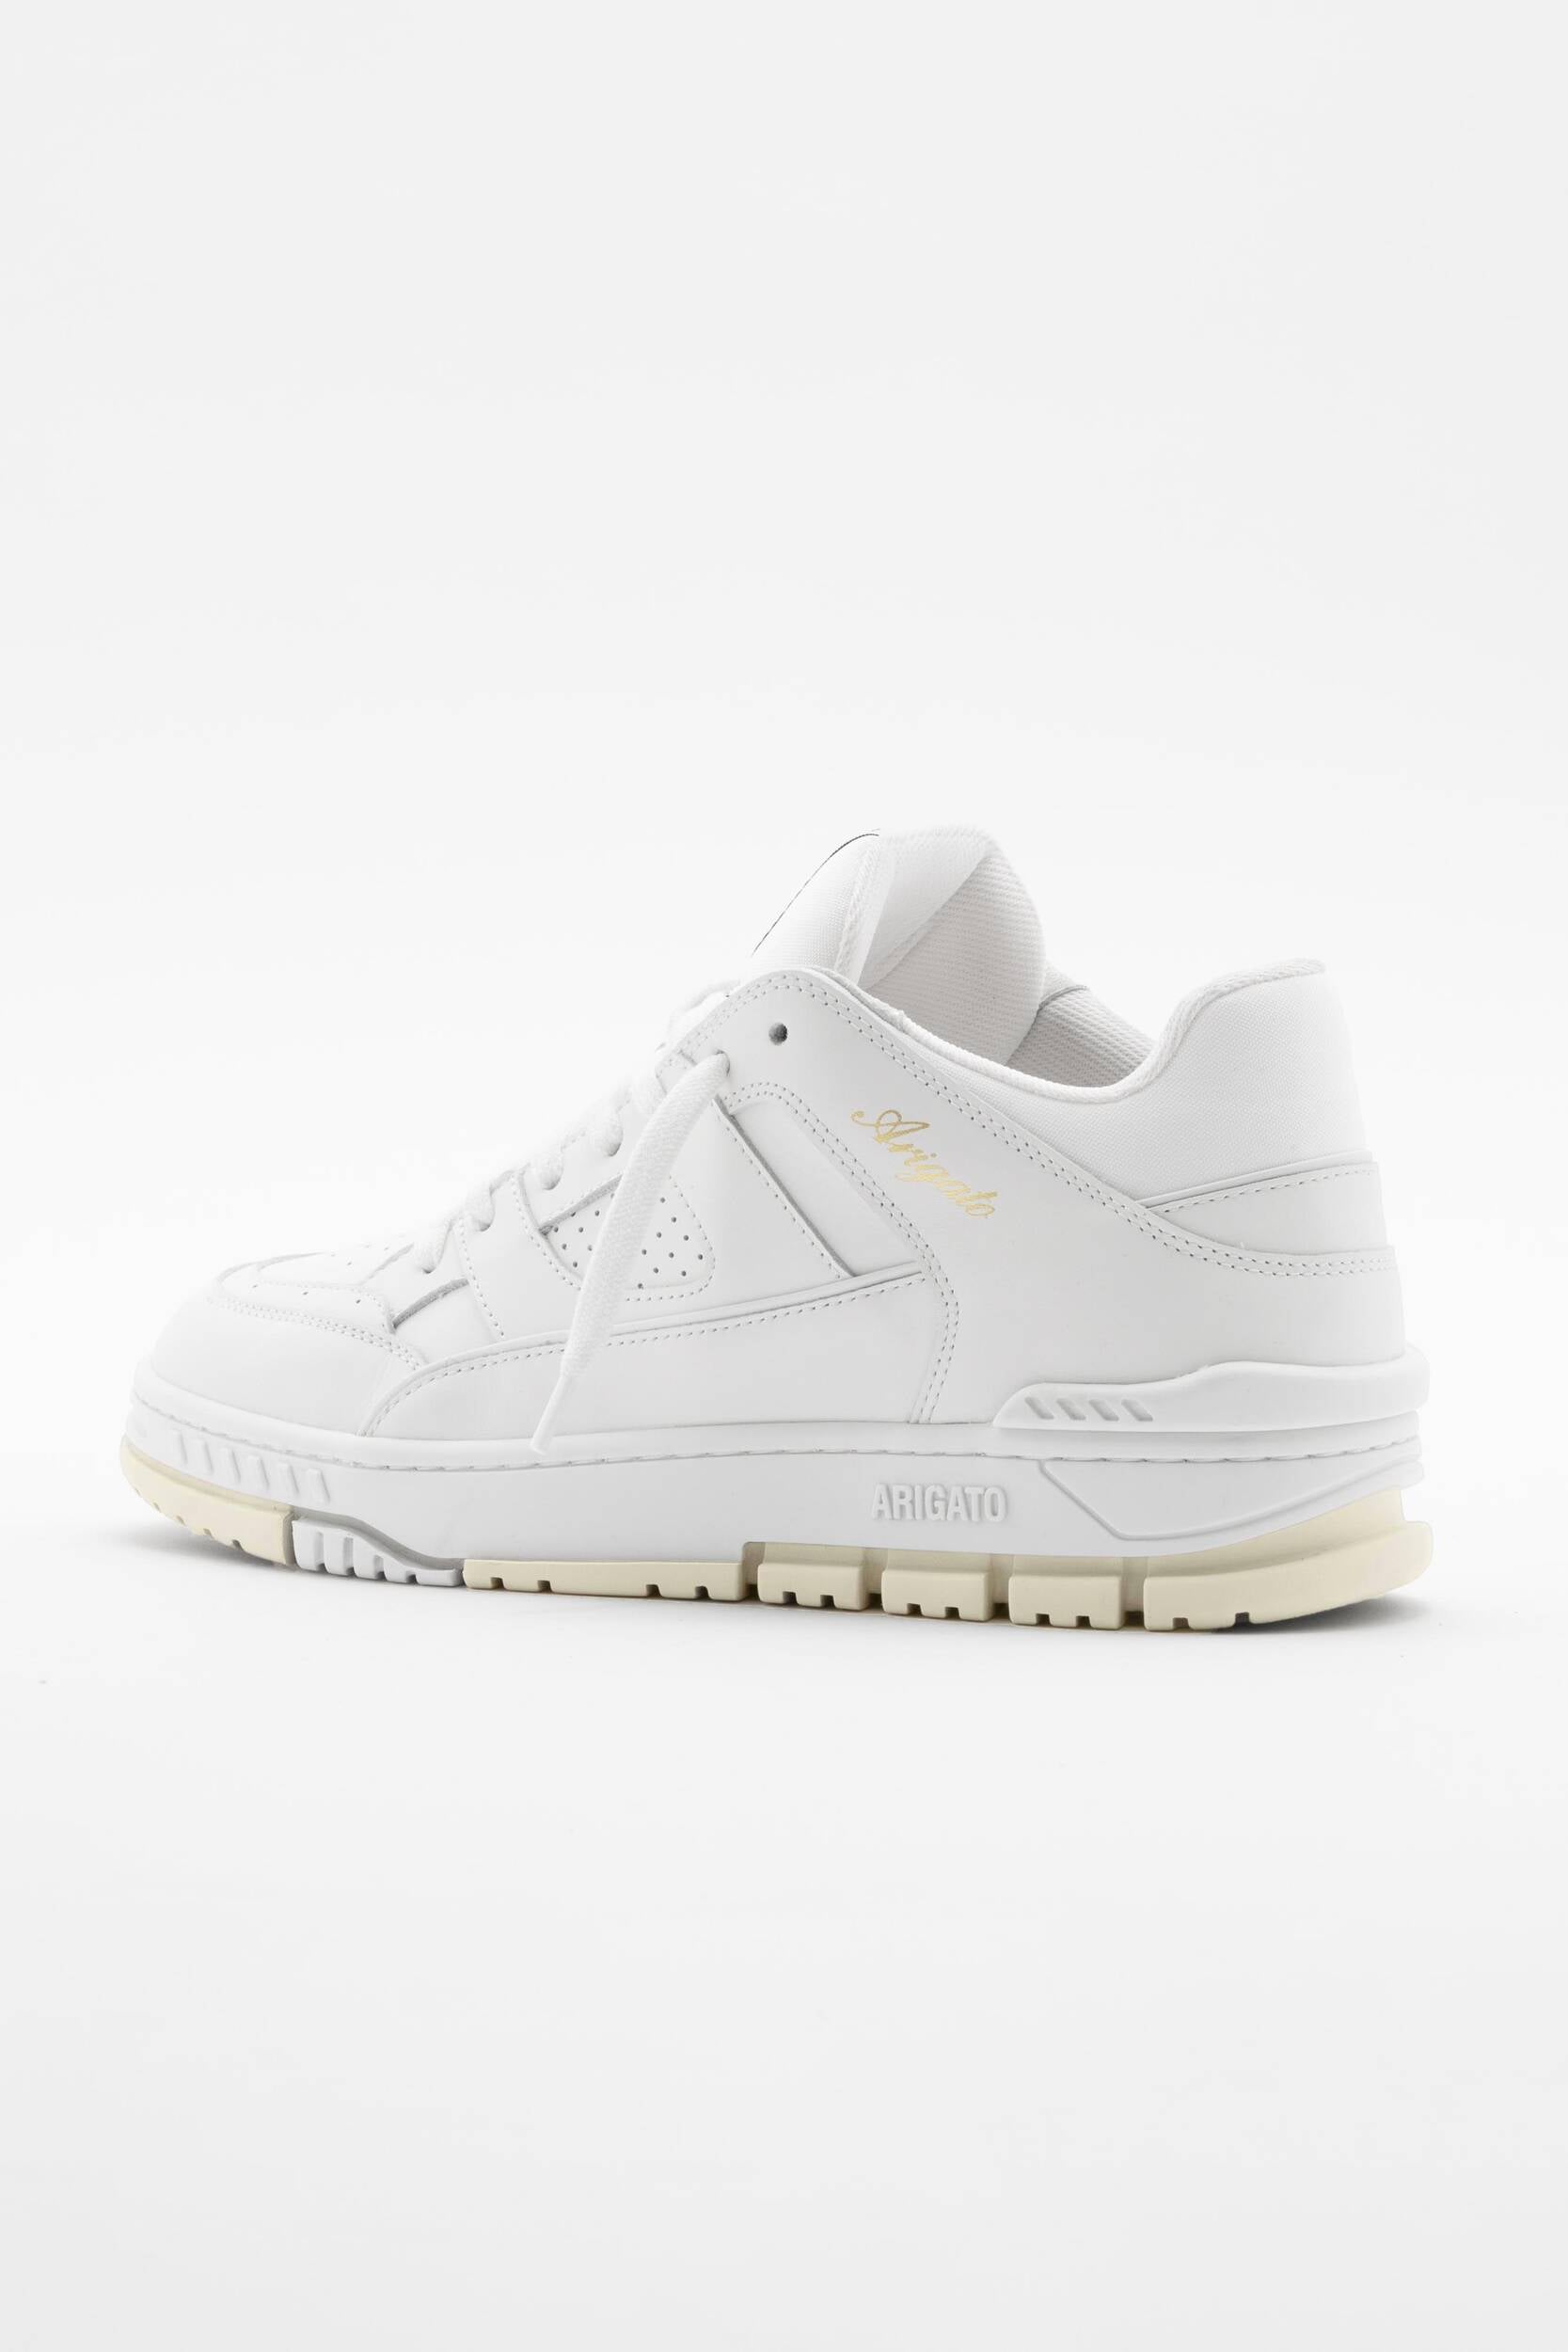 Area Lo Sneaker - White/Beige